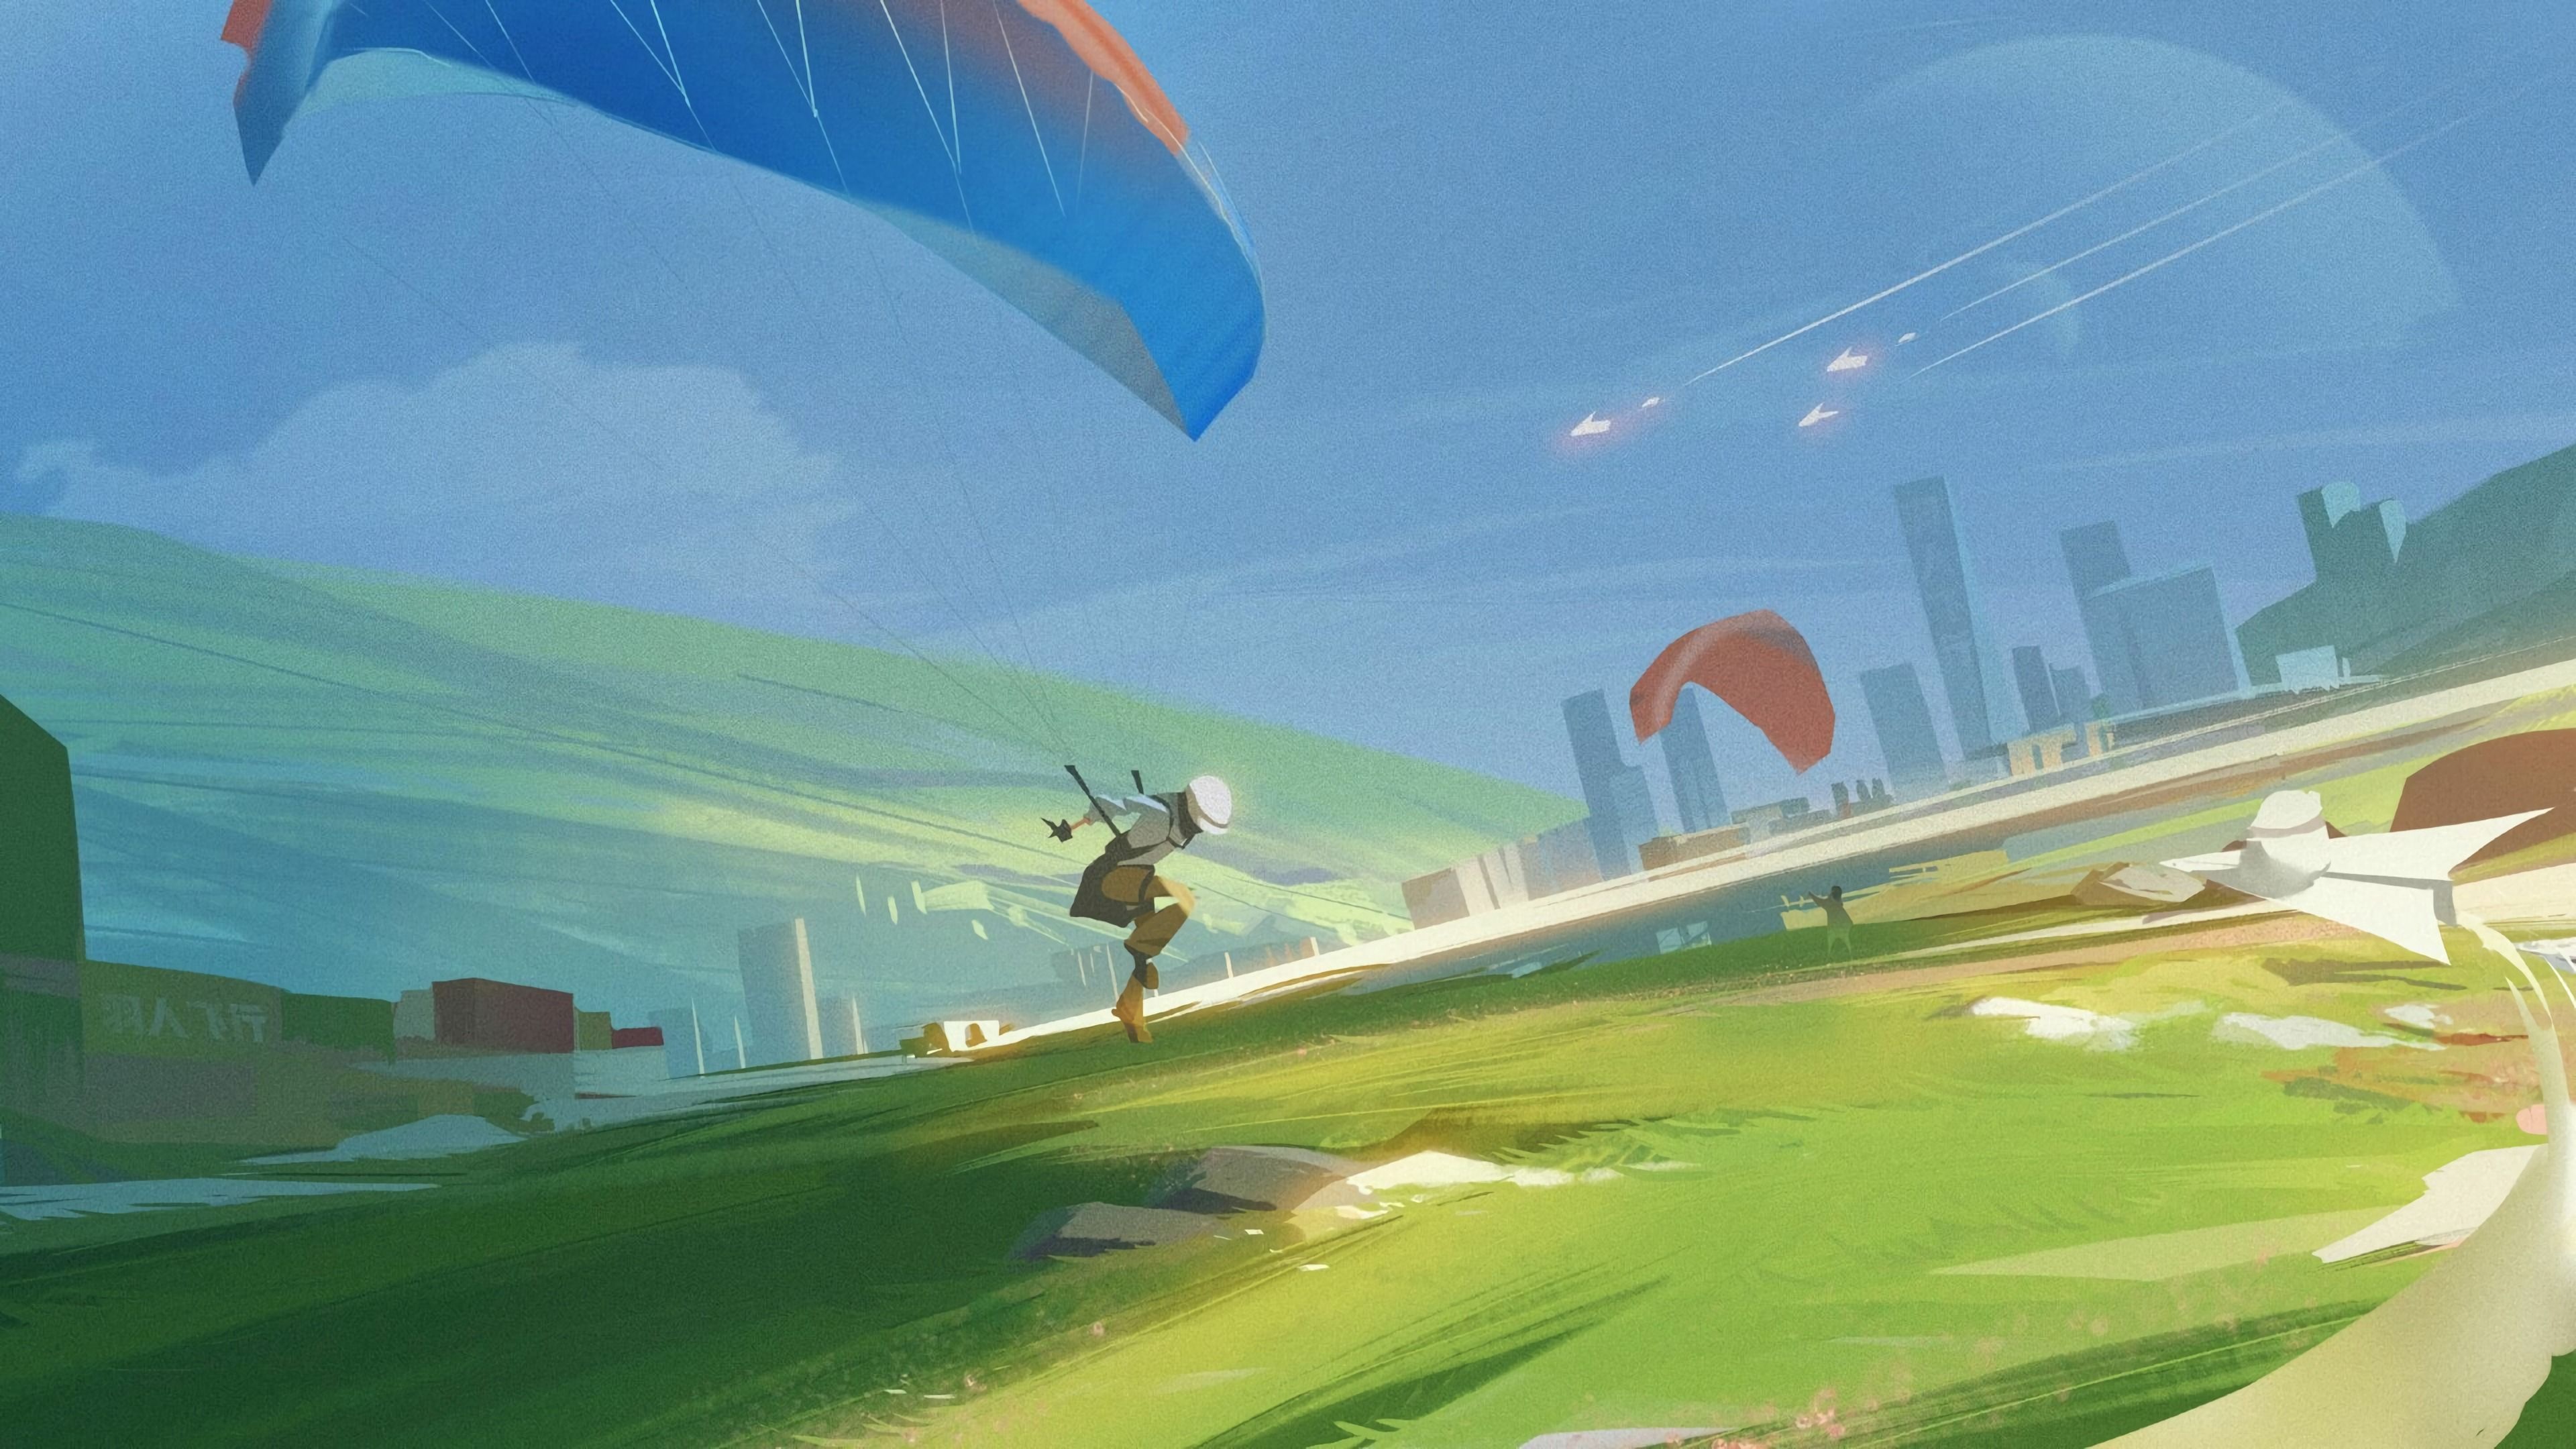 Paragliding: Landing procedure, Operated paraglider windsport, Anime style fan art. 3840x2160 4K Wallpaper.